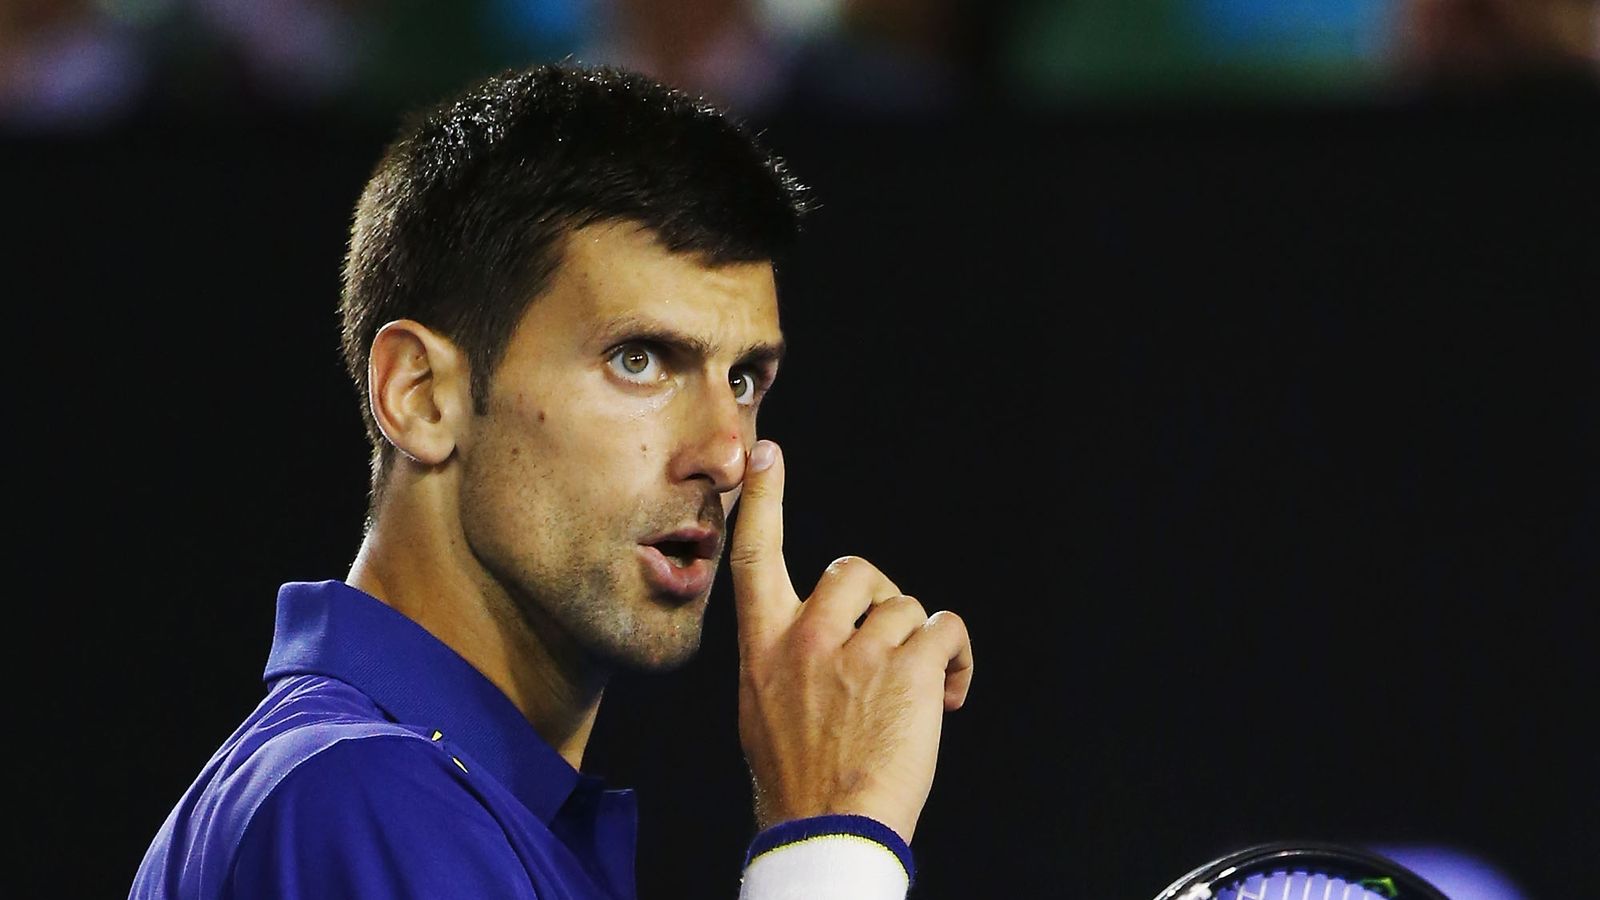 Patrick Mouratoglou explains why tennis fans hate Novak Djokovic: “he beat Roger Federer and Rafael Nadal”